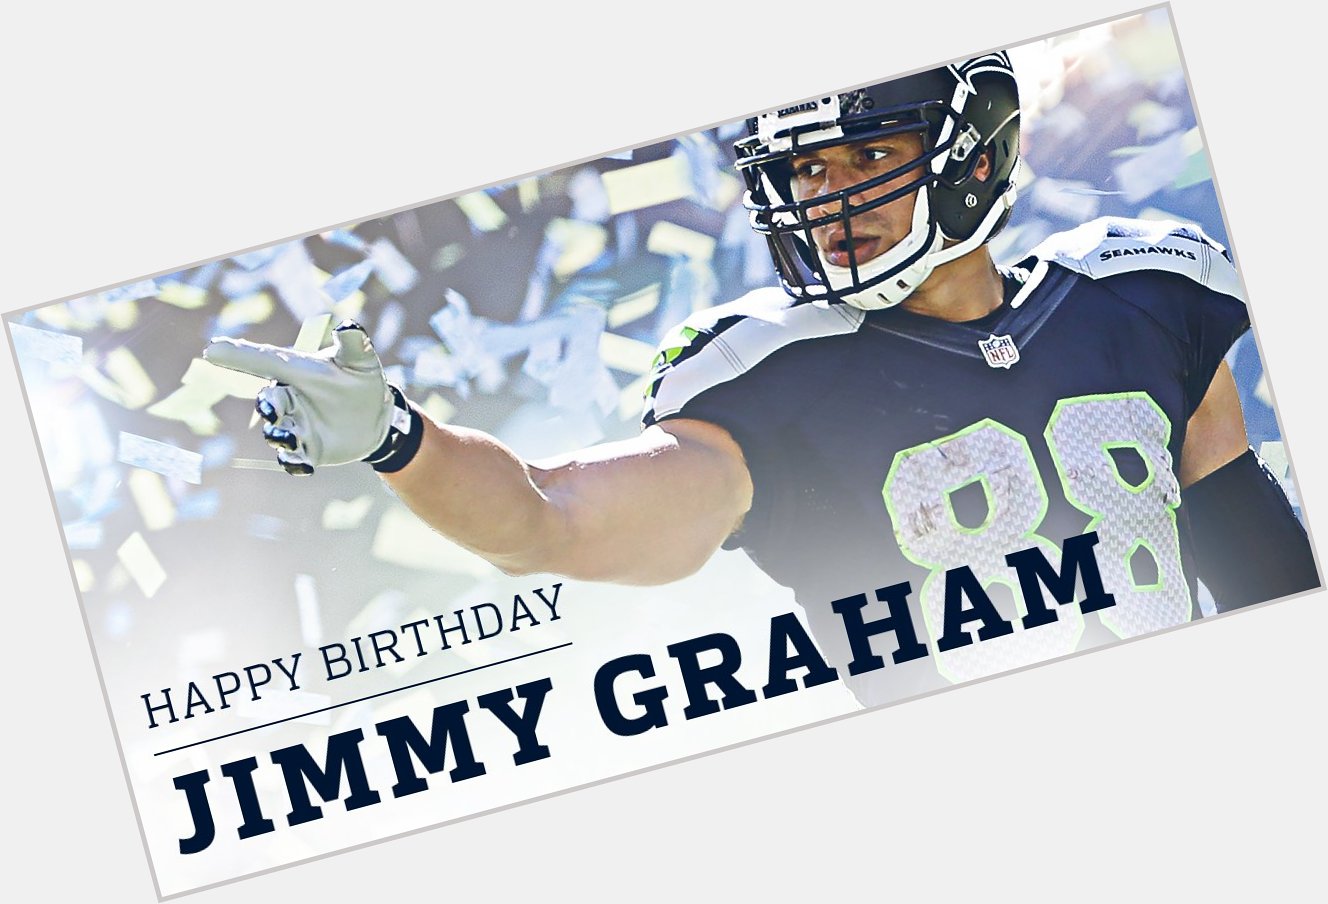 _graceinyoface: Seahawks: Happy birthday to our high flying TE, thejimmygraham!!   [ 